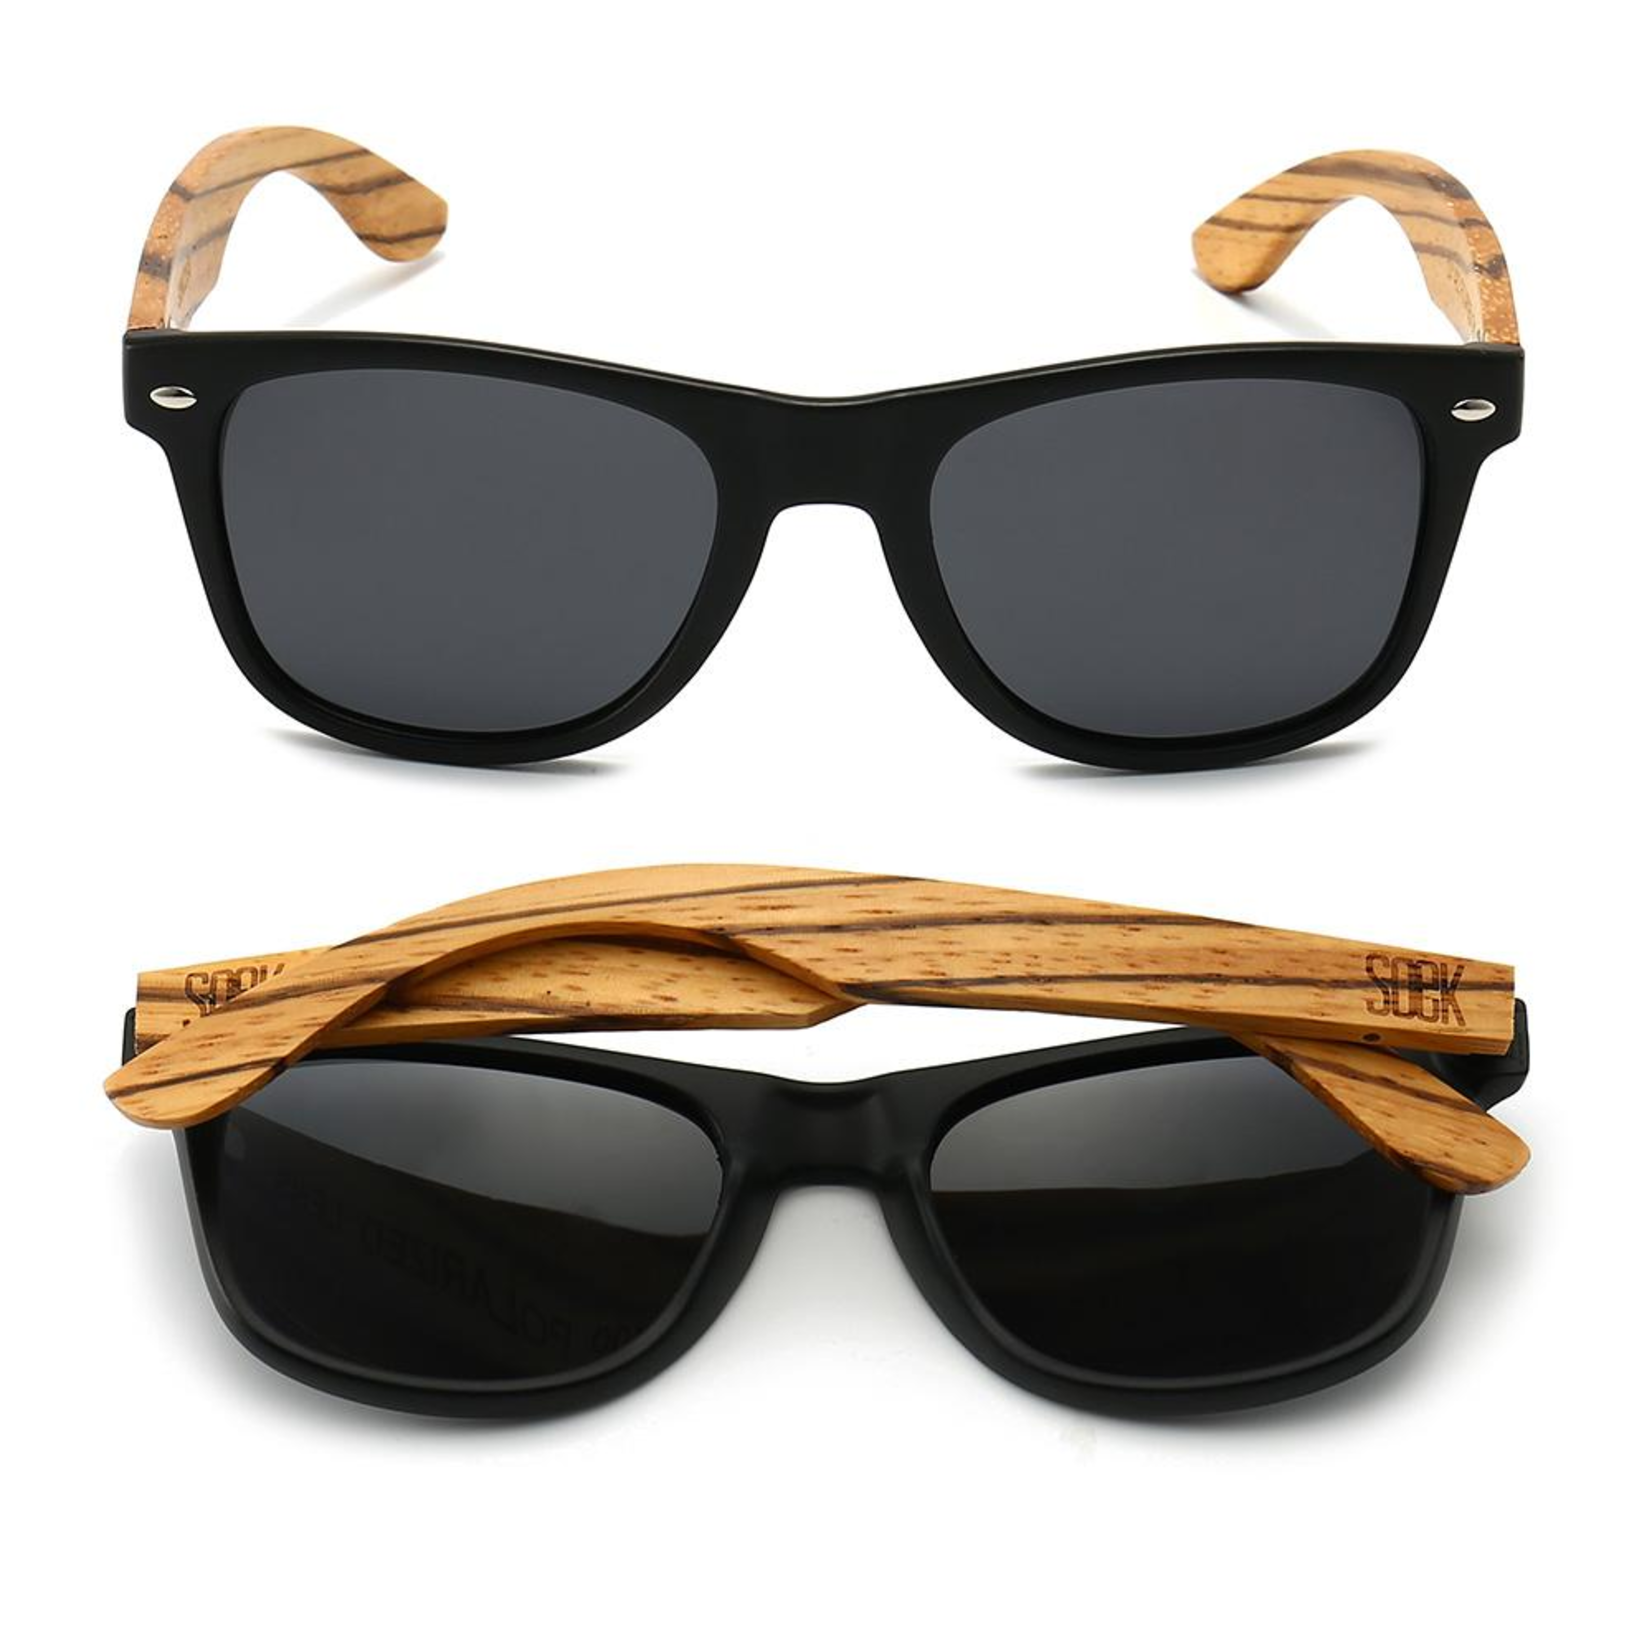 Soek Sunglasses Black w Walnut Arms - Balmoral